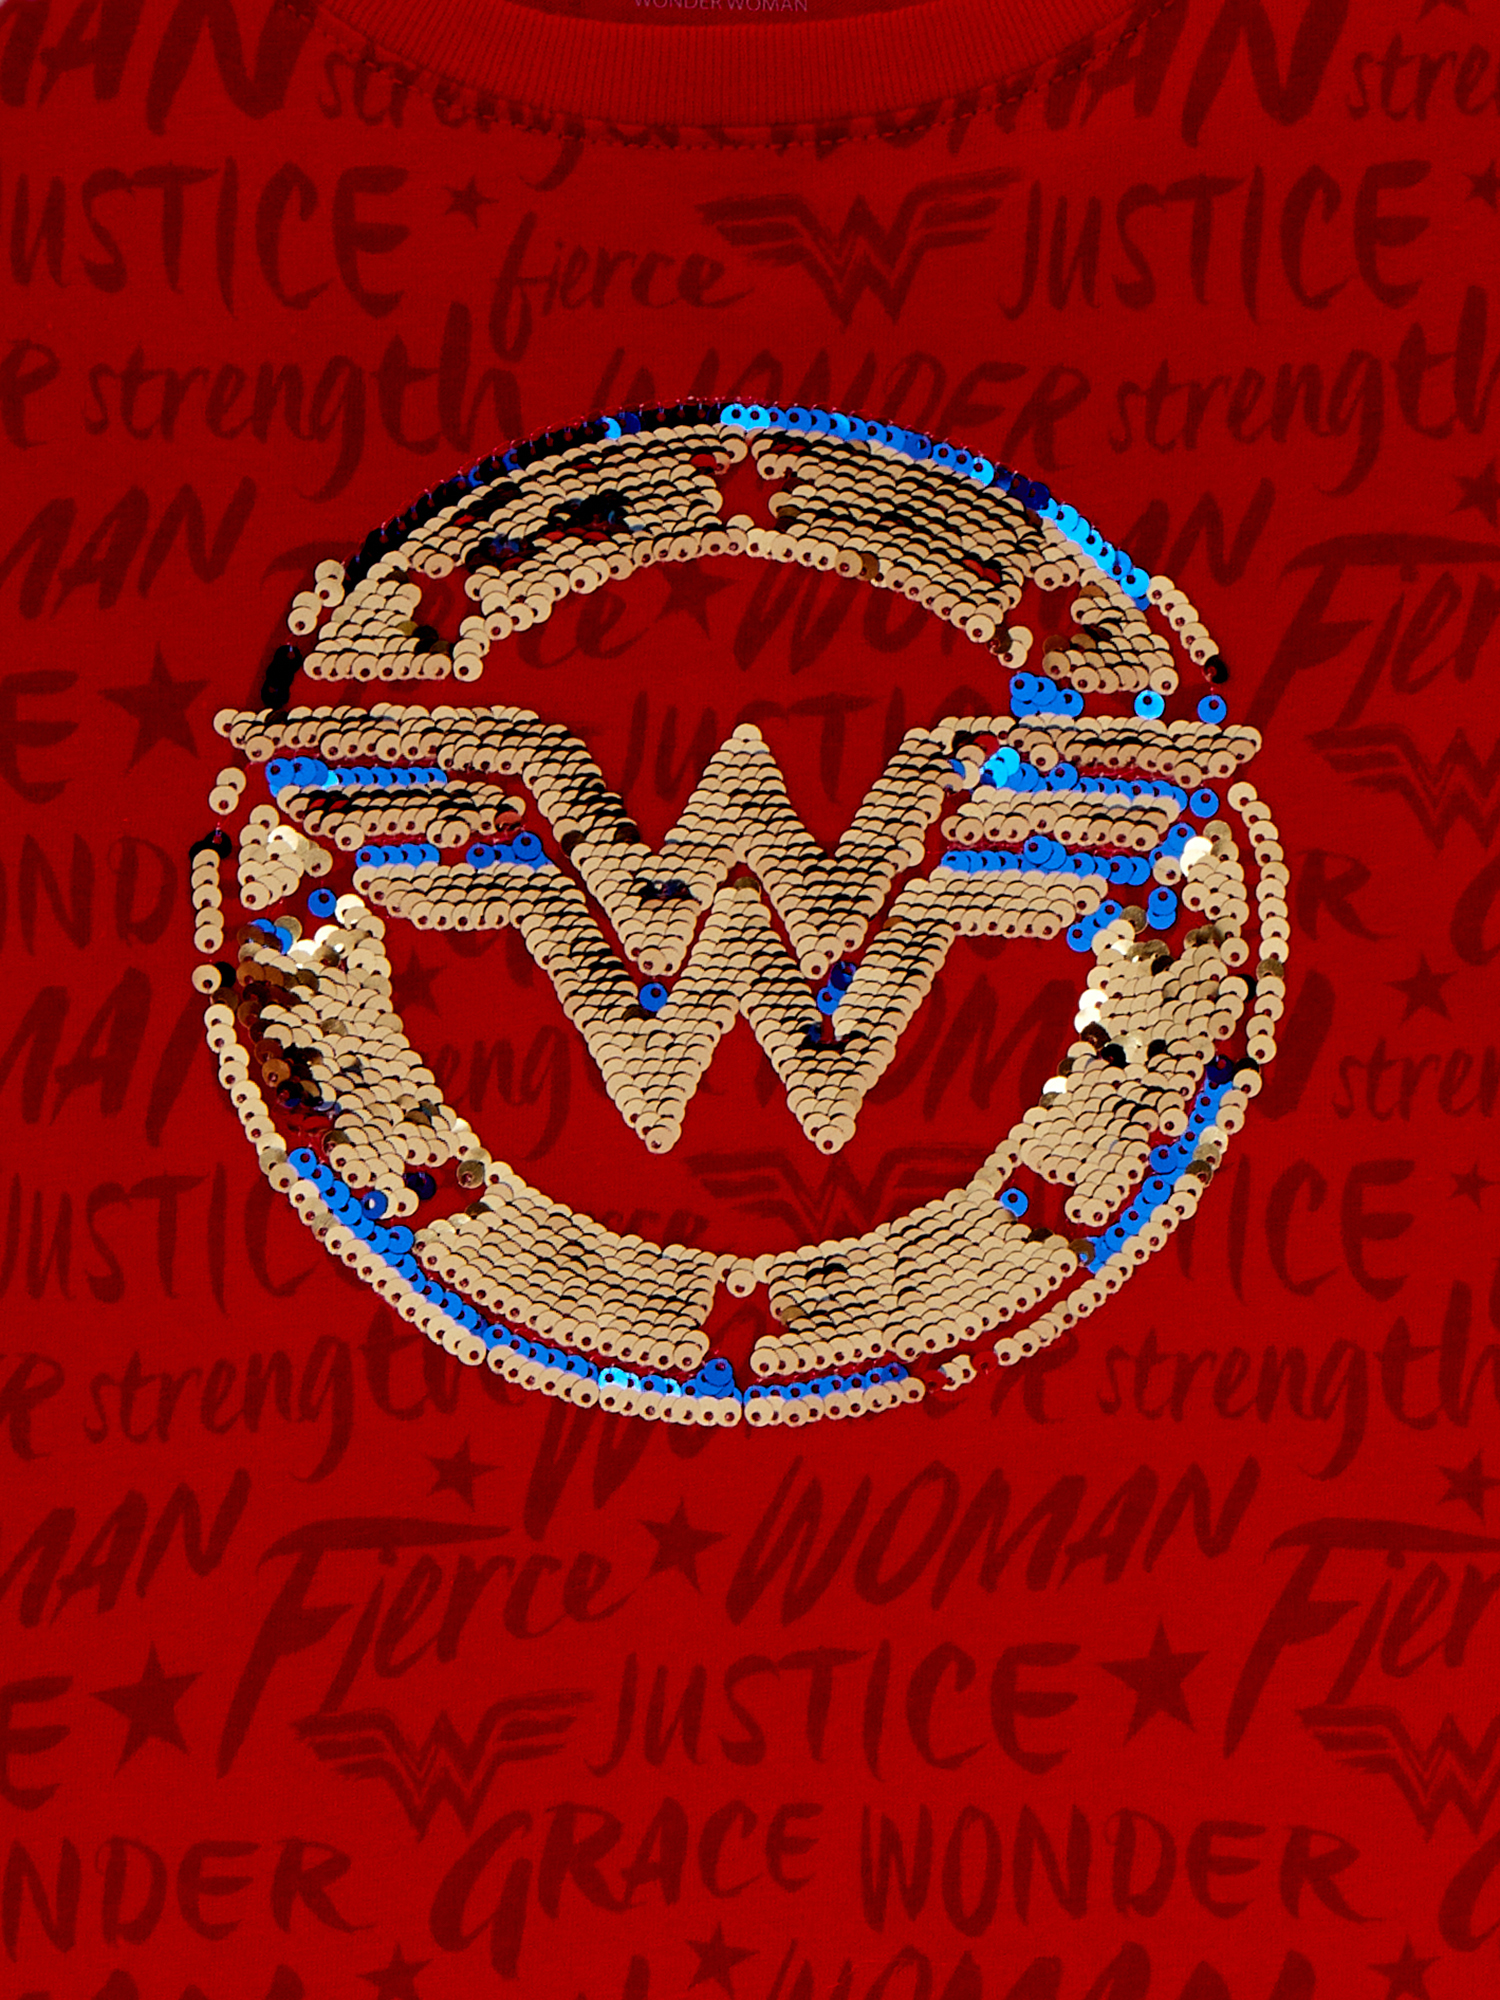 Wonder Woman 2 Girls Graphic Tee - image 3 of 3